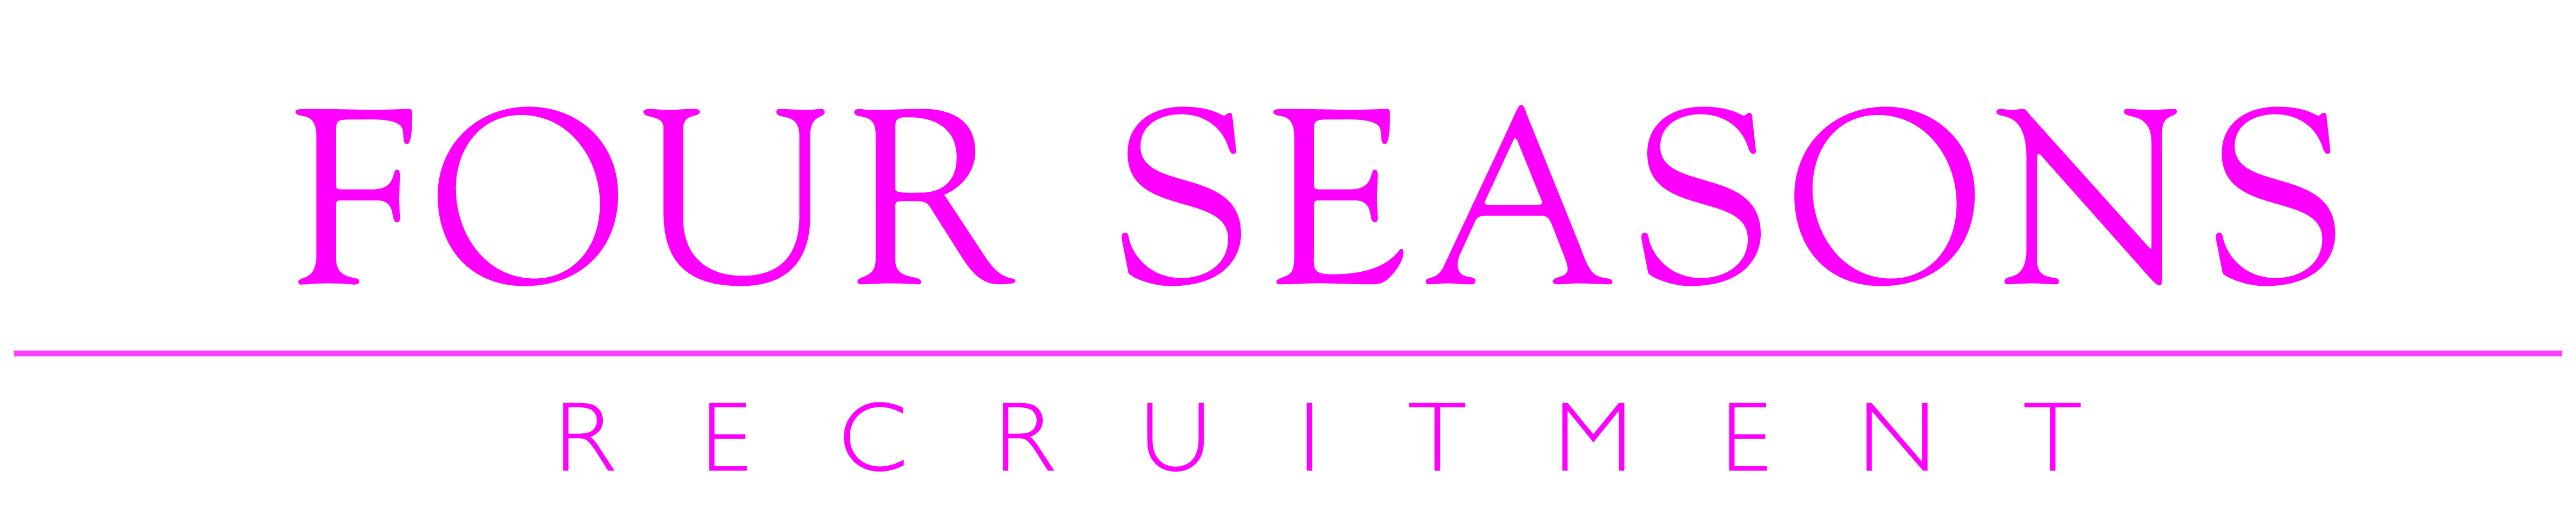 Four Seasons Recruitment Ltd.